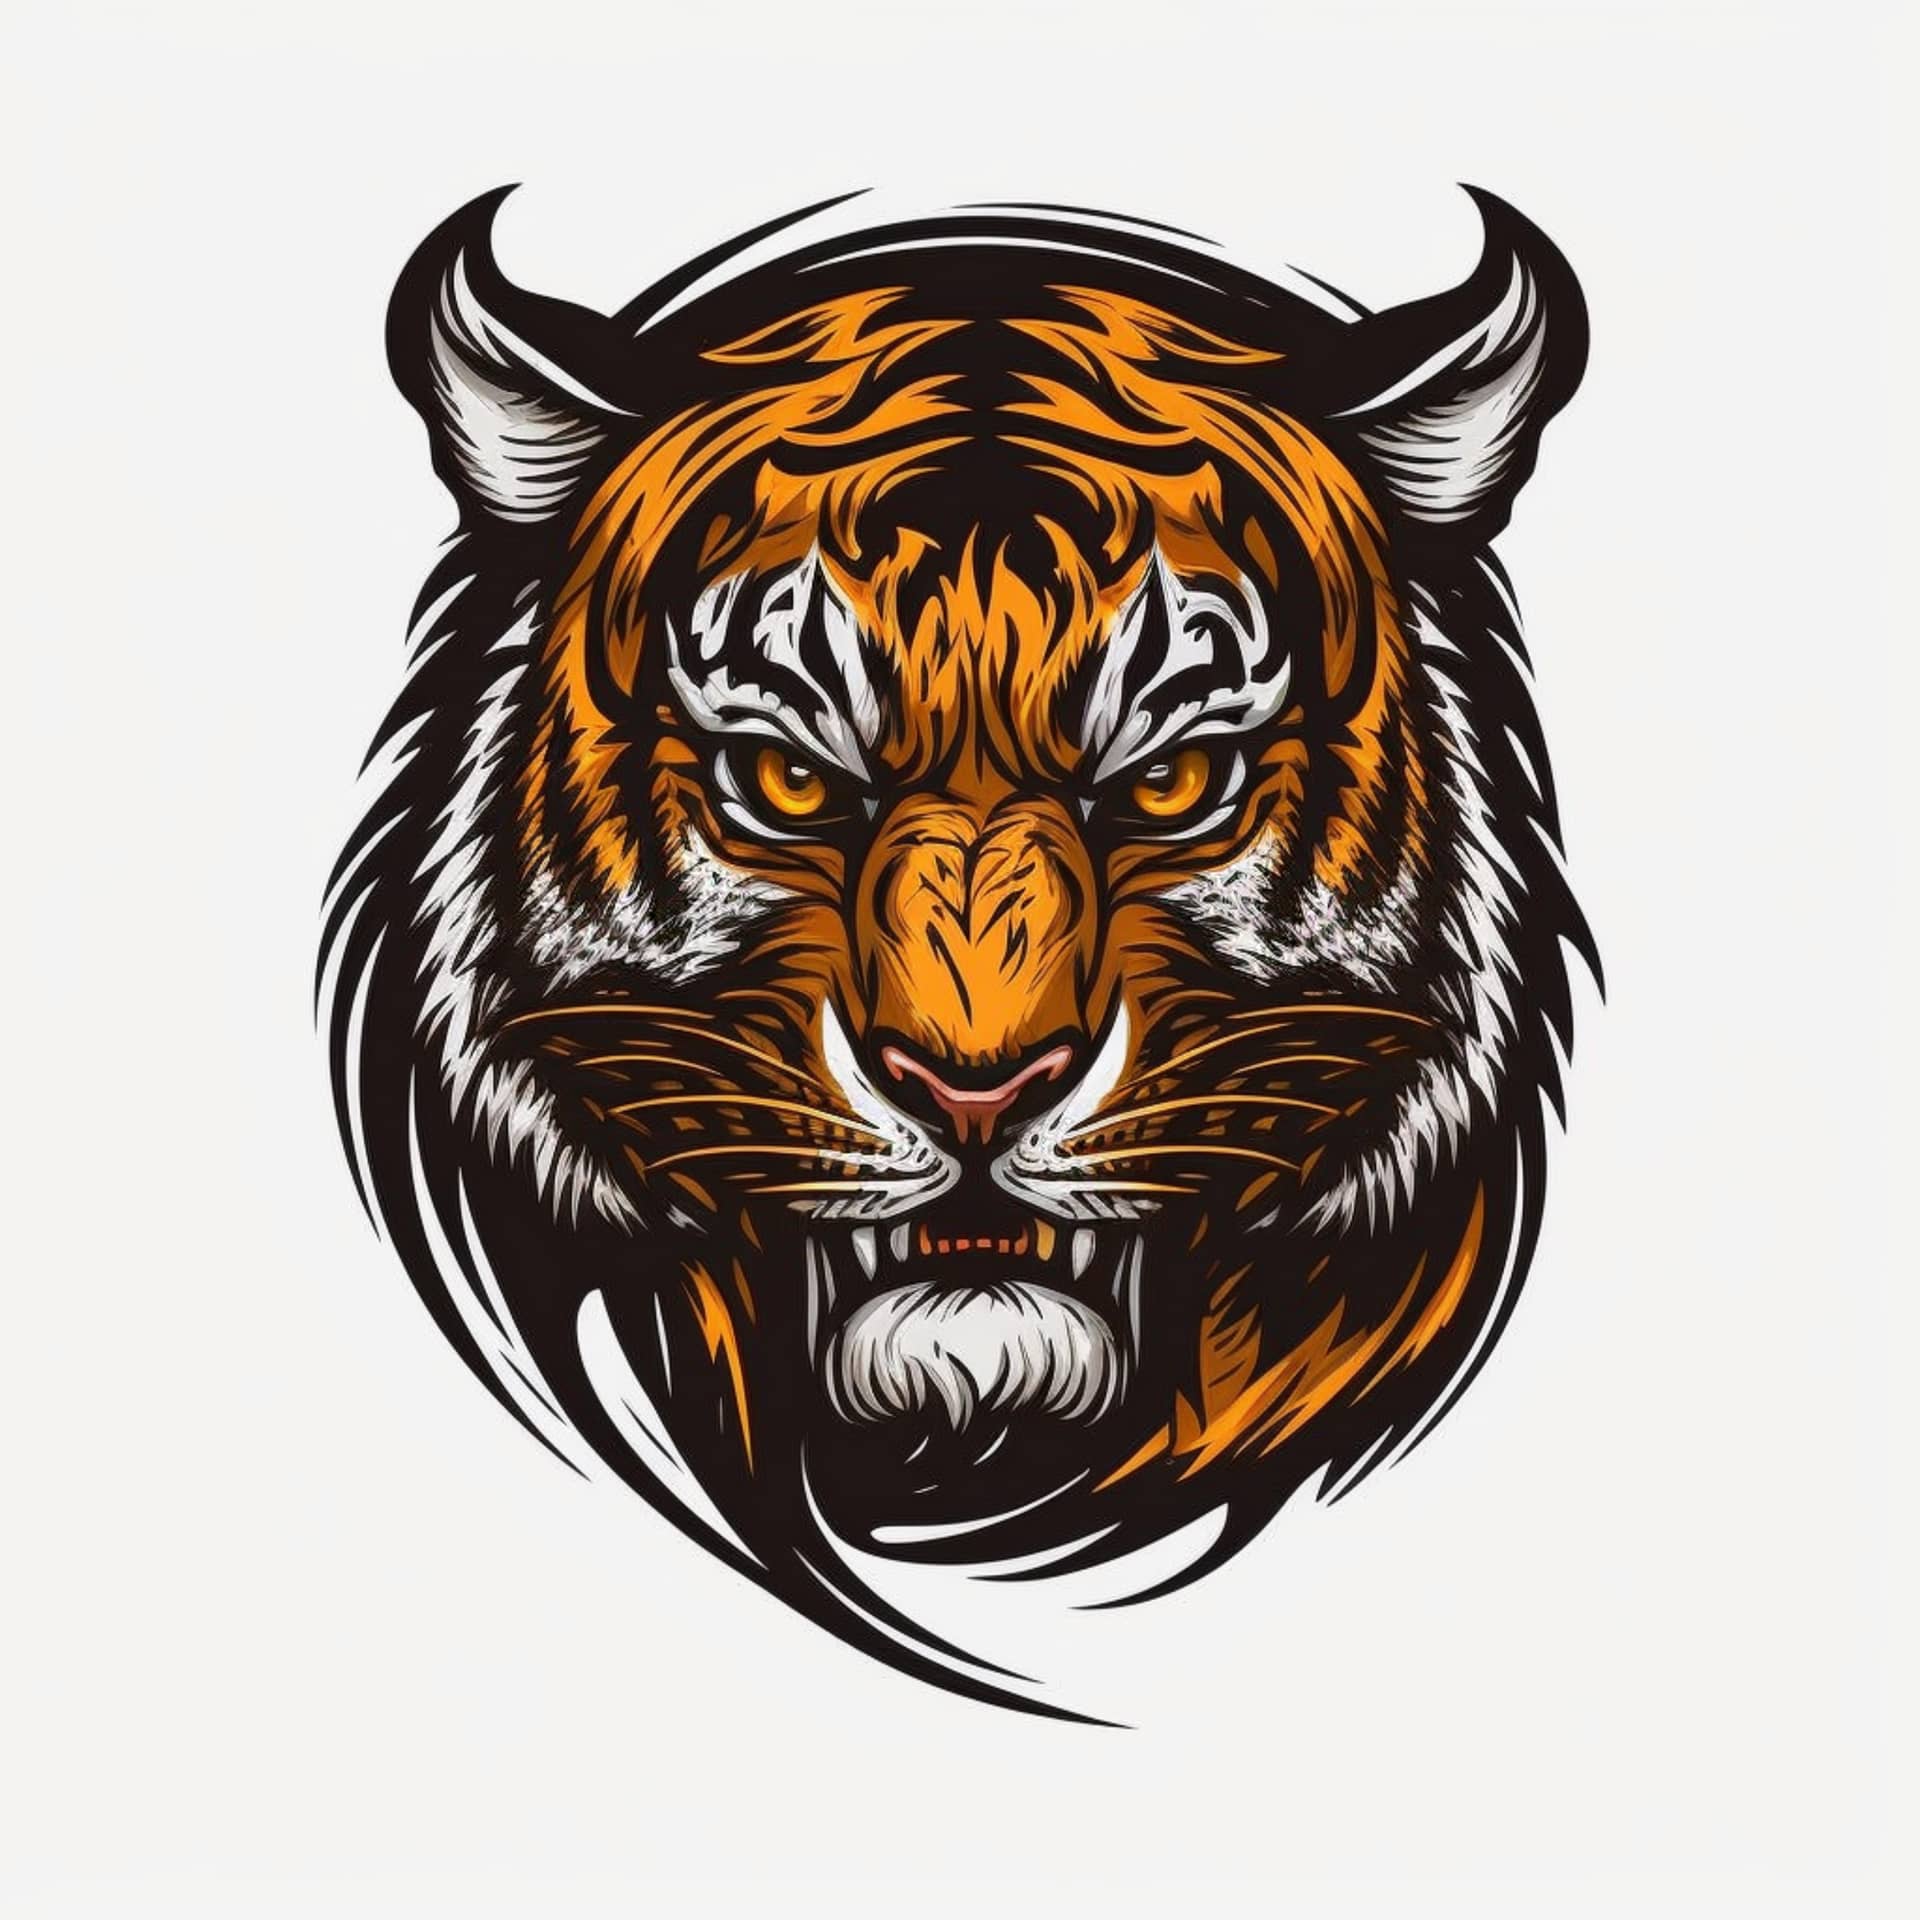 Cool tiger logo vector illustration picture